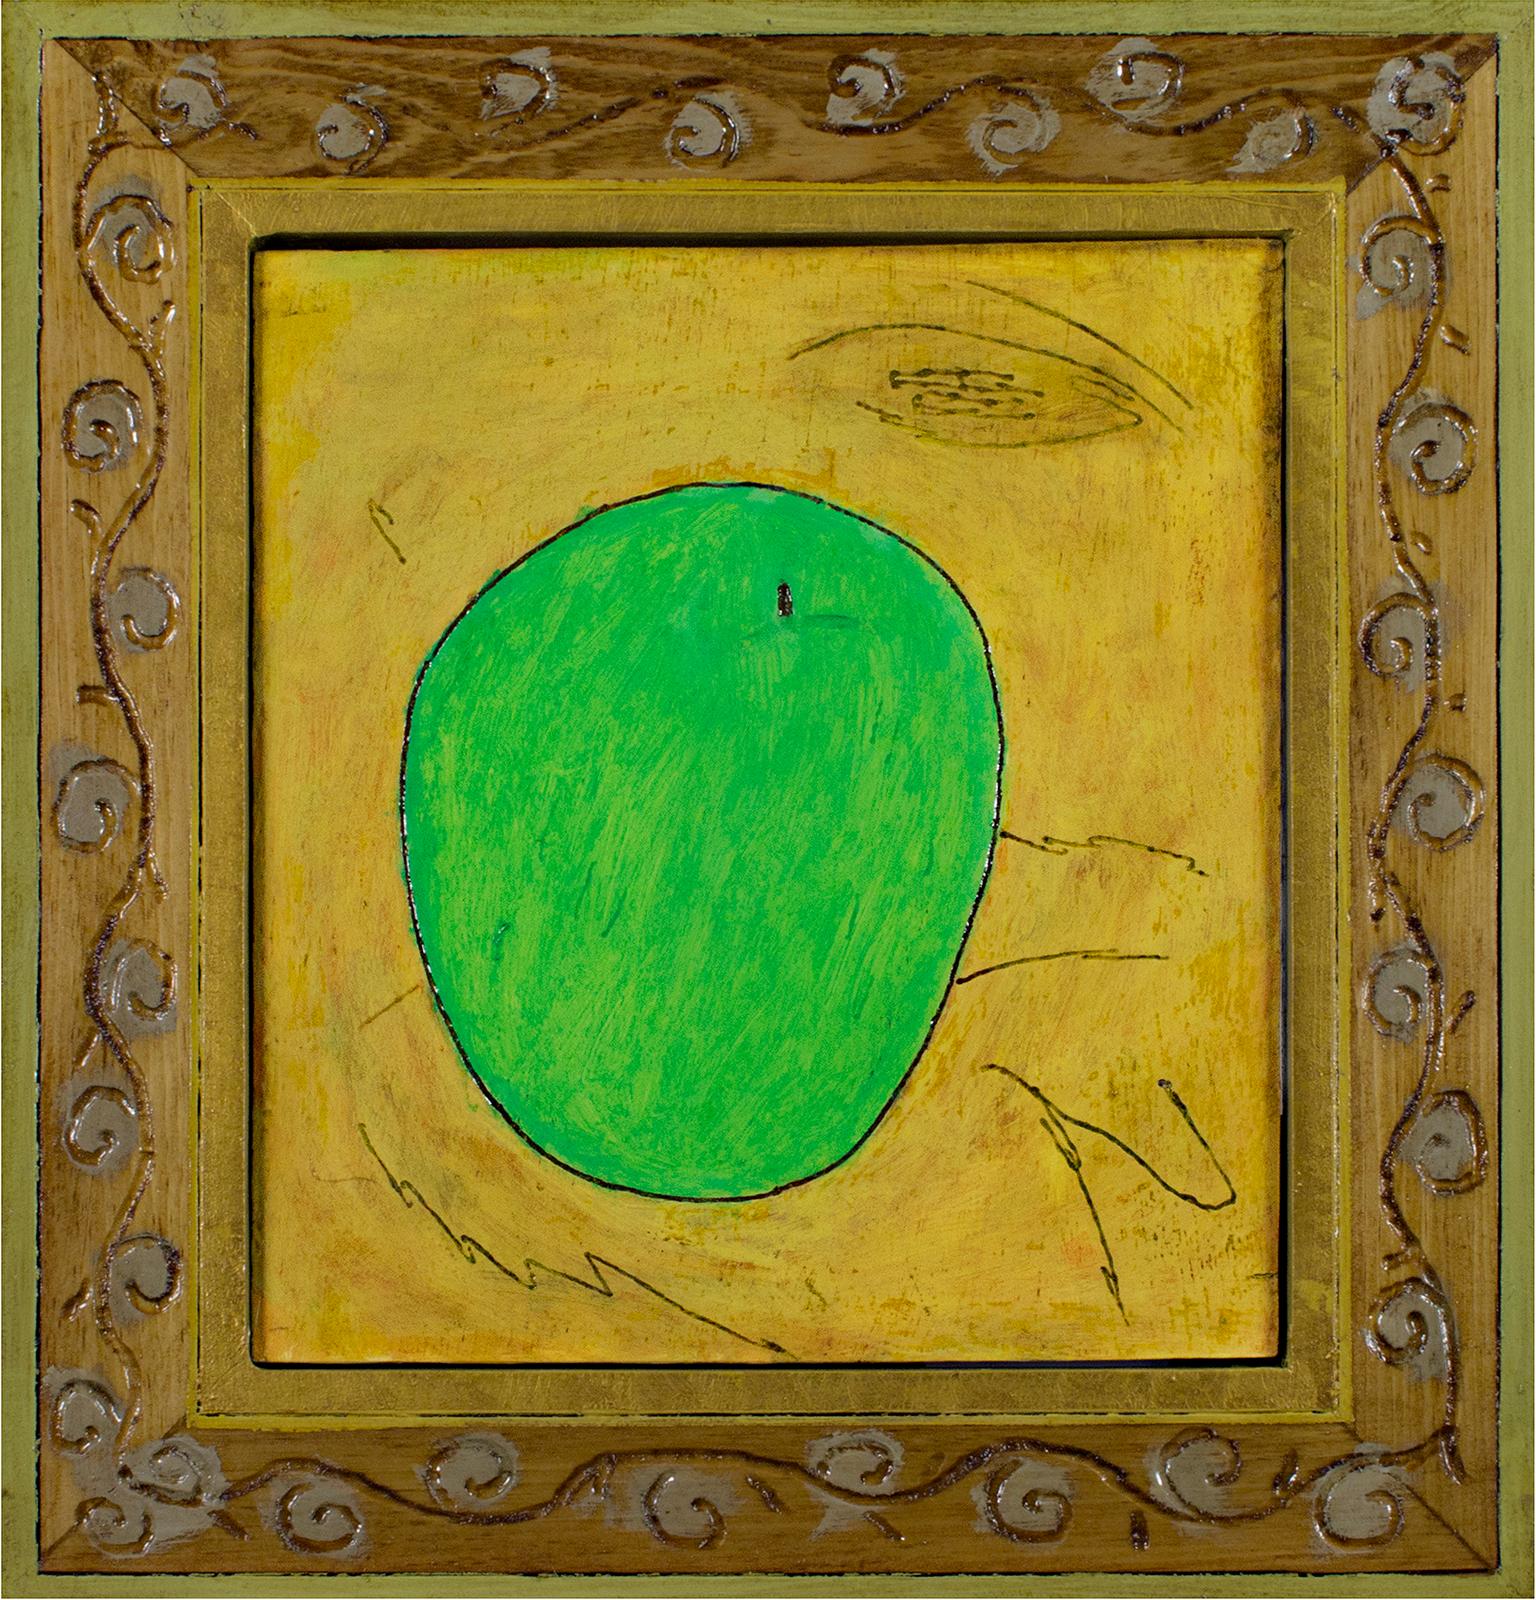 green apple artist